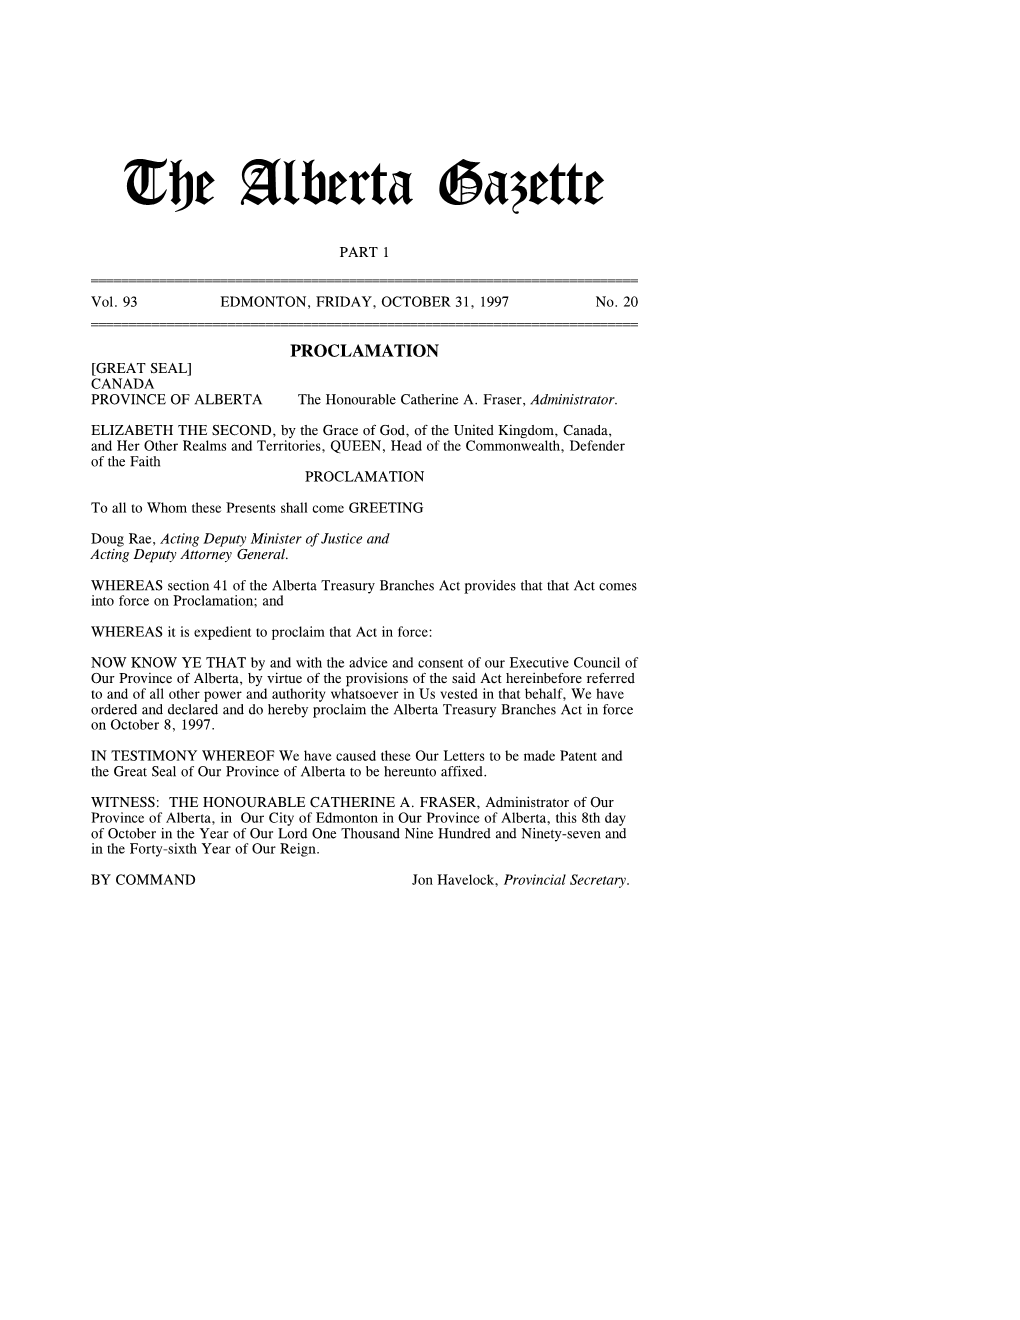 The Alberta Gazette, Part I, October 31, 1997